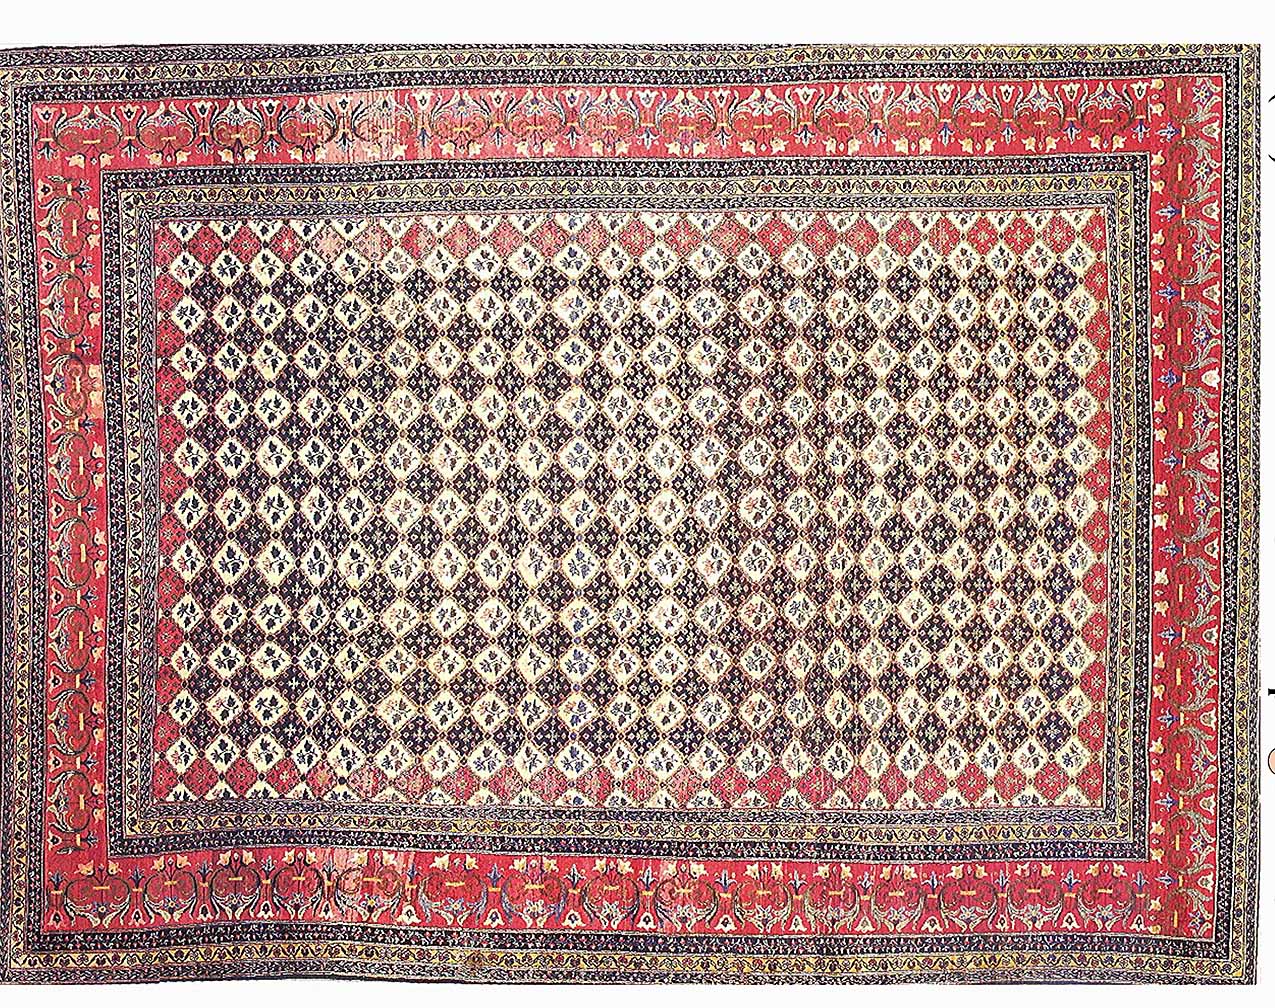 Antique tabriz Carpet - # 54455